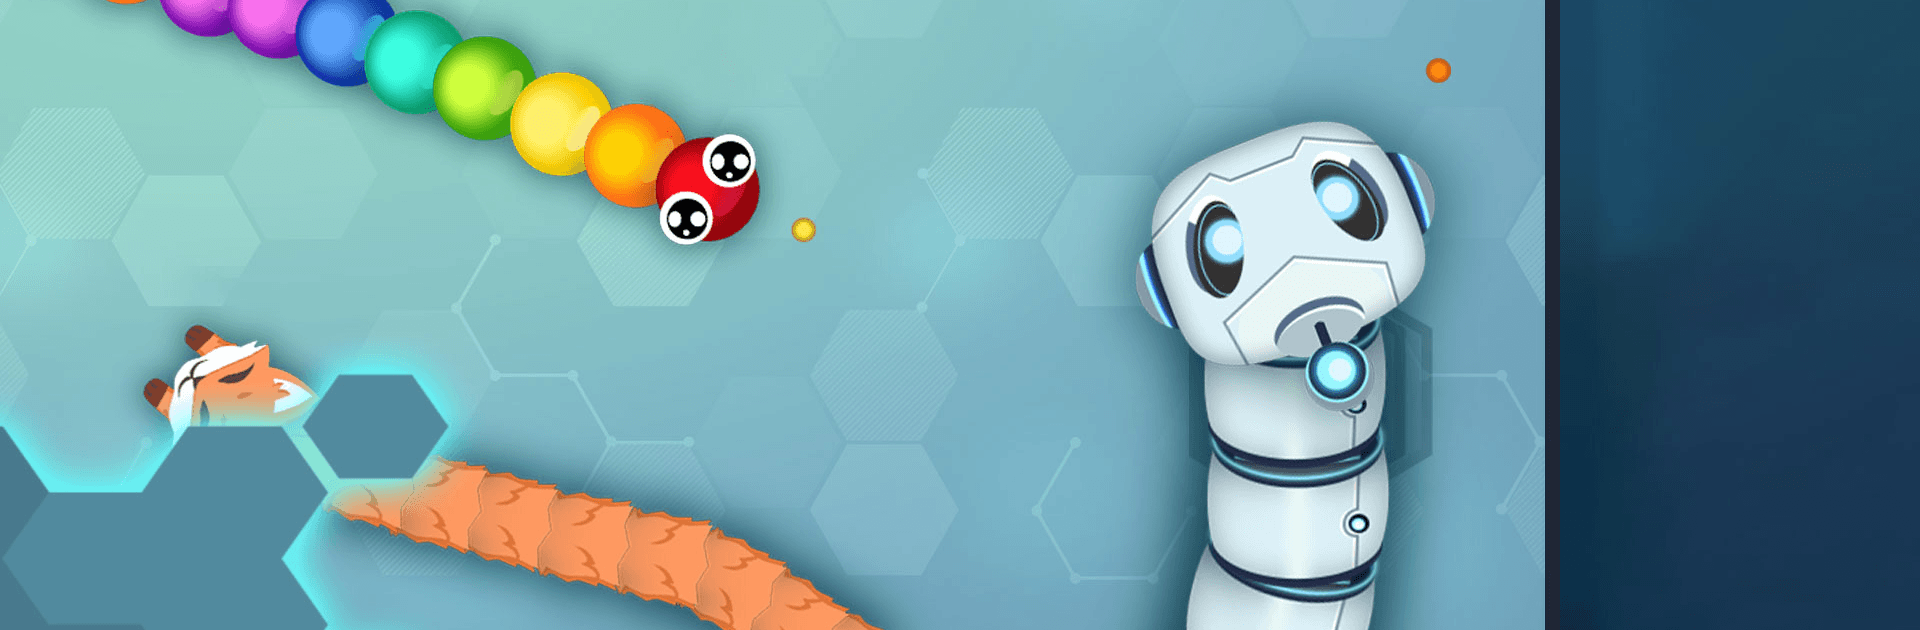 Download & Play Snake.io - Fun Addicting Arcade Battle .io Games on PC &  Mac (Emulator)